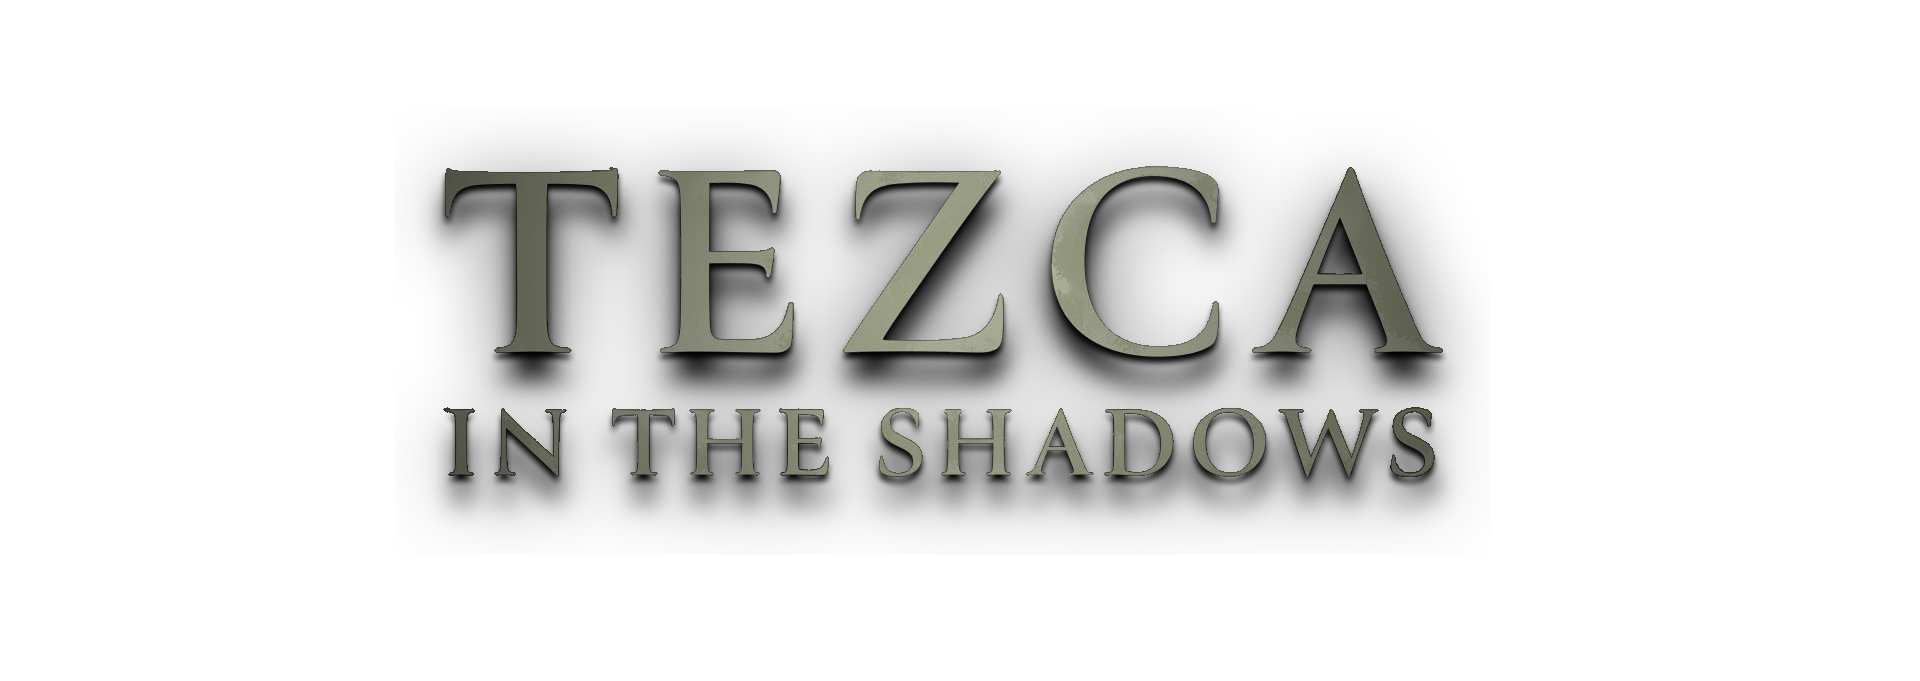 Tezca: In The Shadows